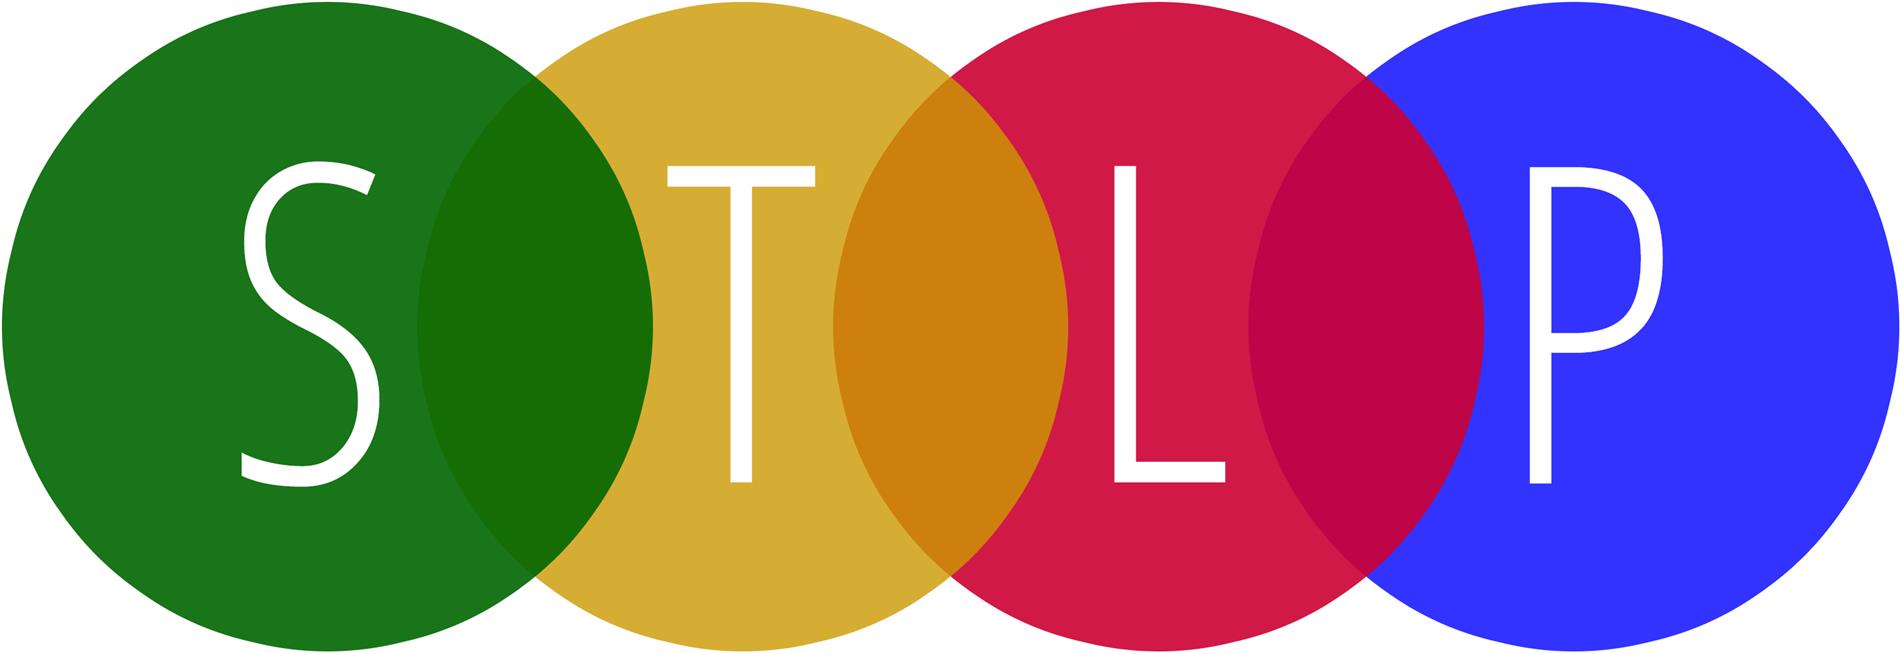 STLP Logo